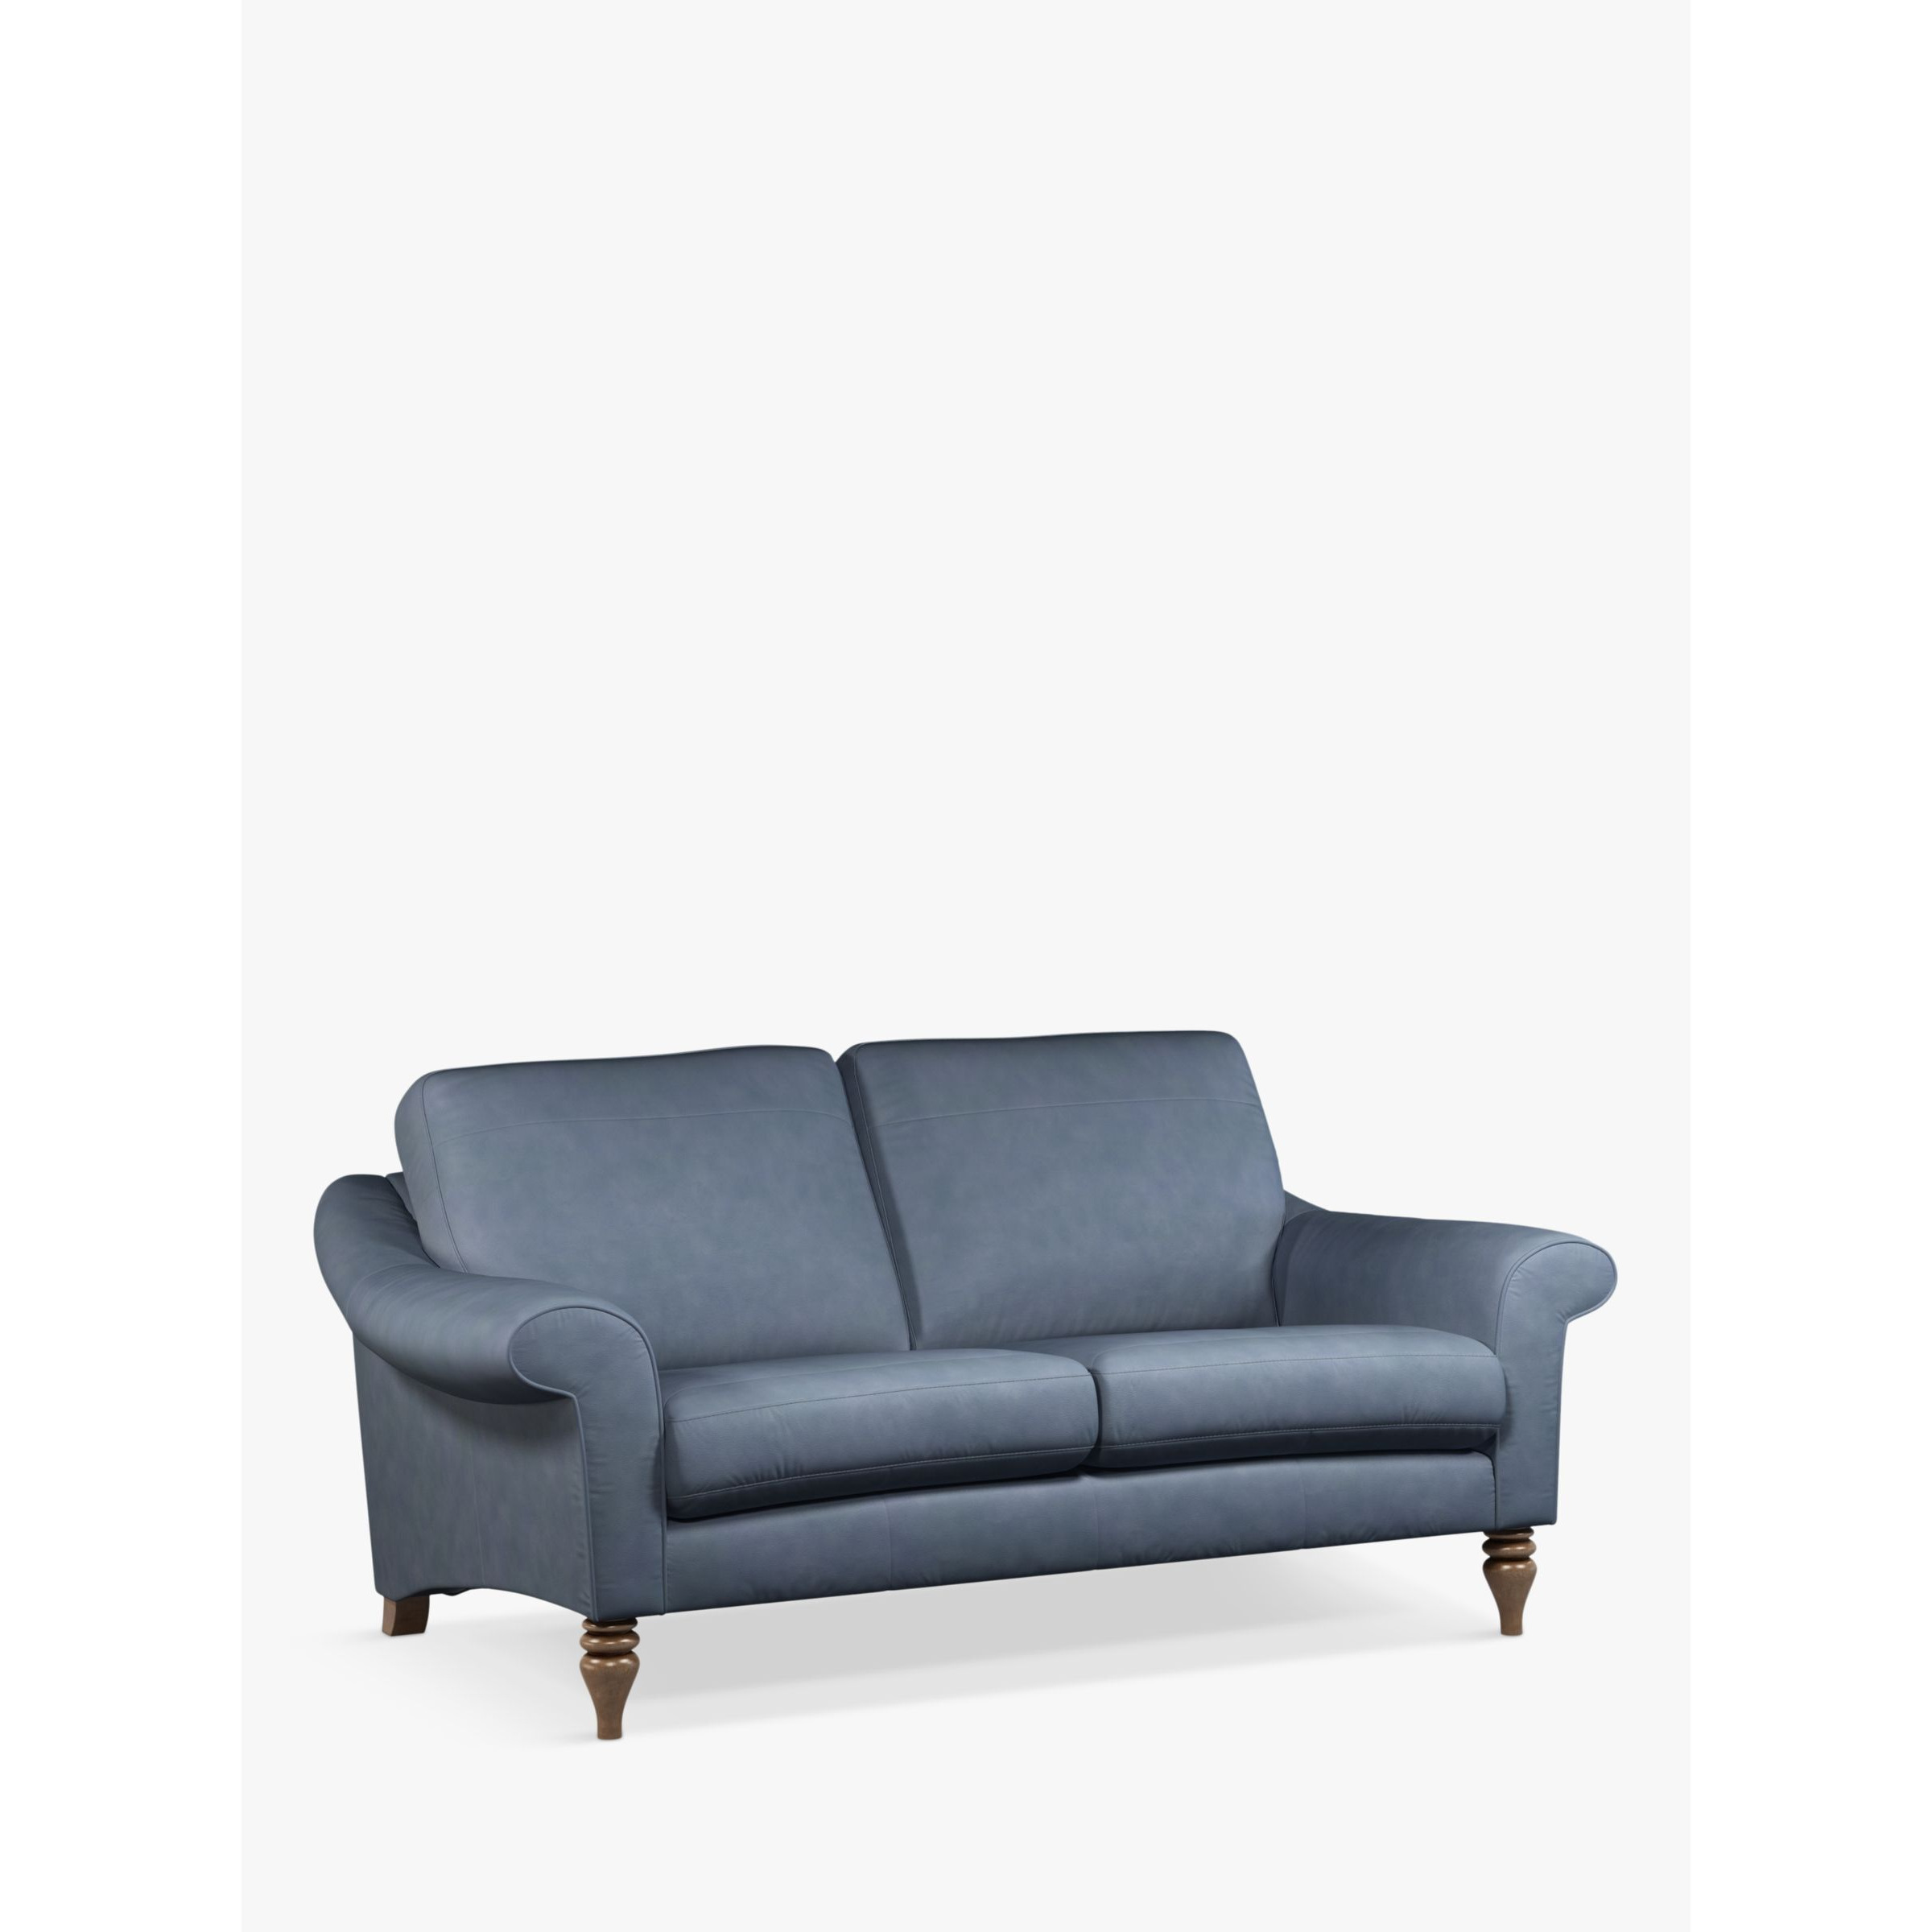 John Lewis Camber Medium 2 Seater Leather Sofa, Dark Leg - image 1